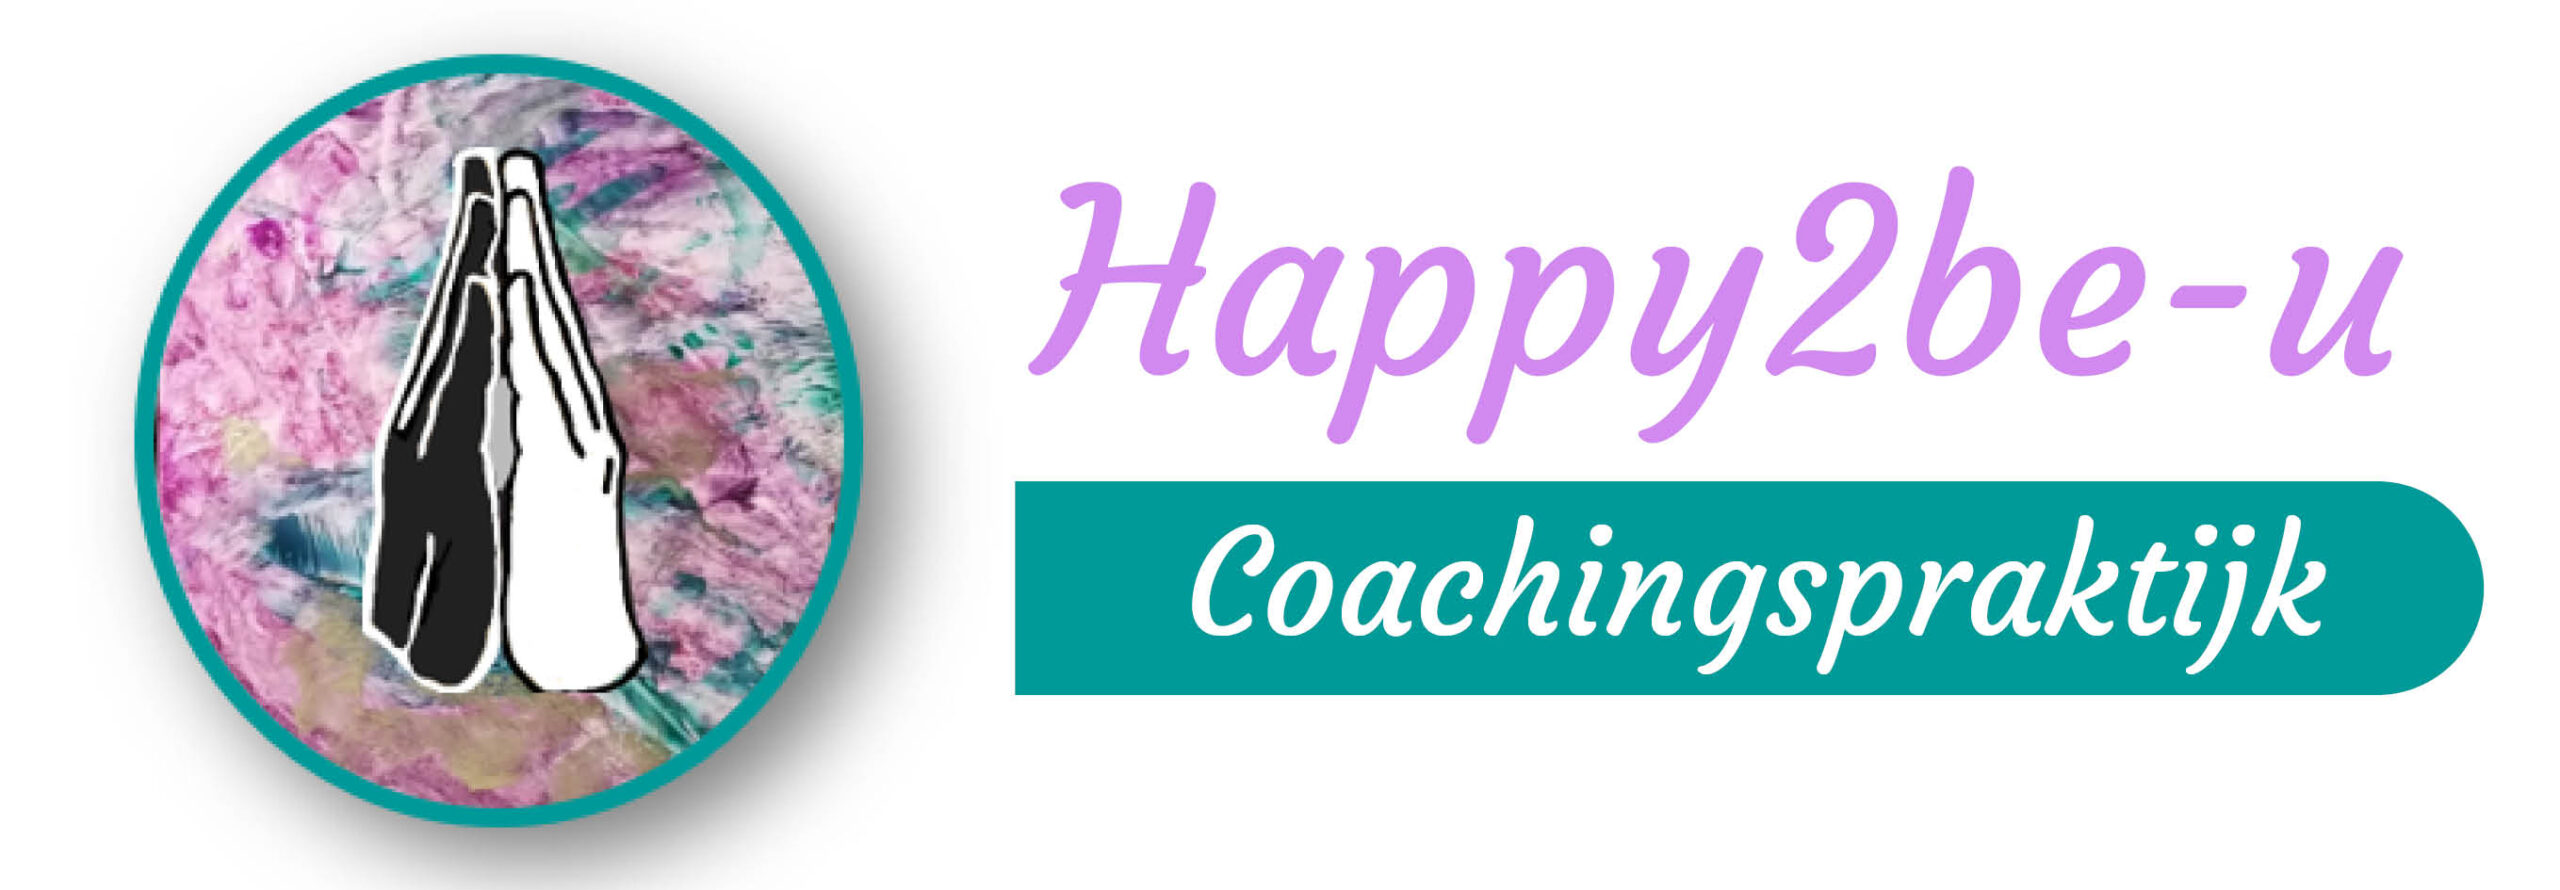 Happy2be-u Coachingspraktijk